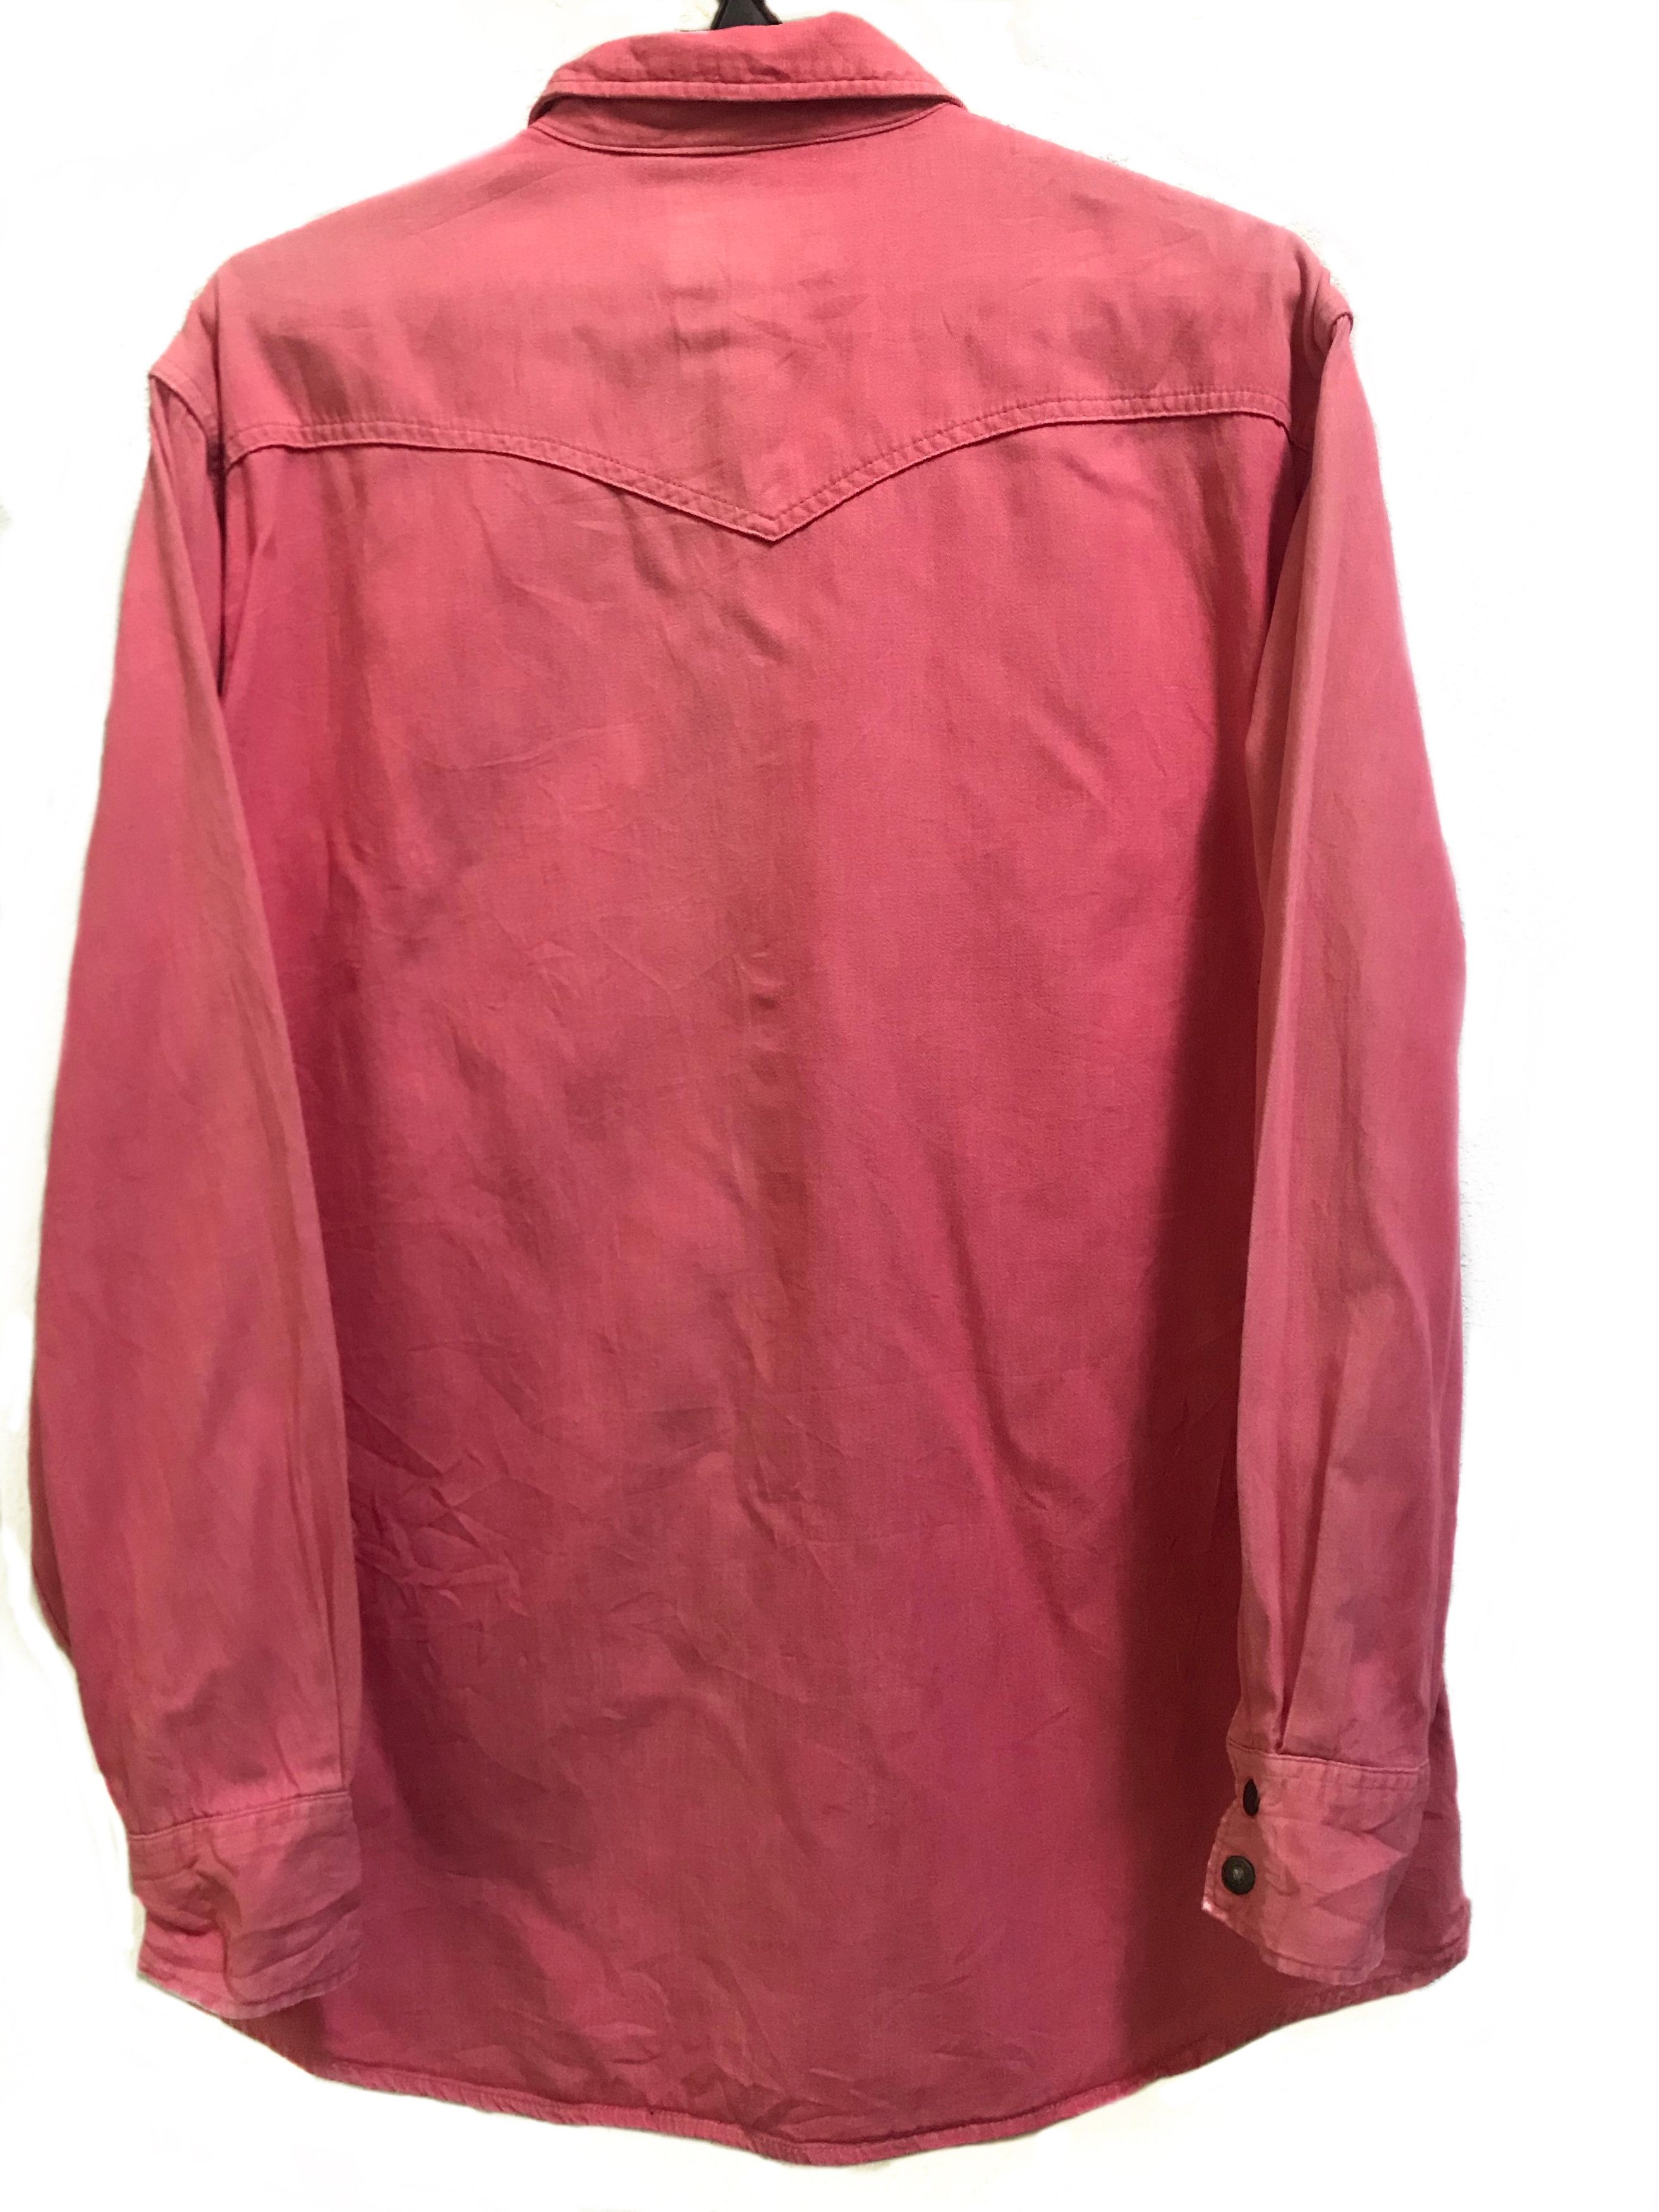 Vintage Levi’s Chambray Button Ups Shirt - 2